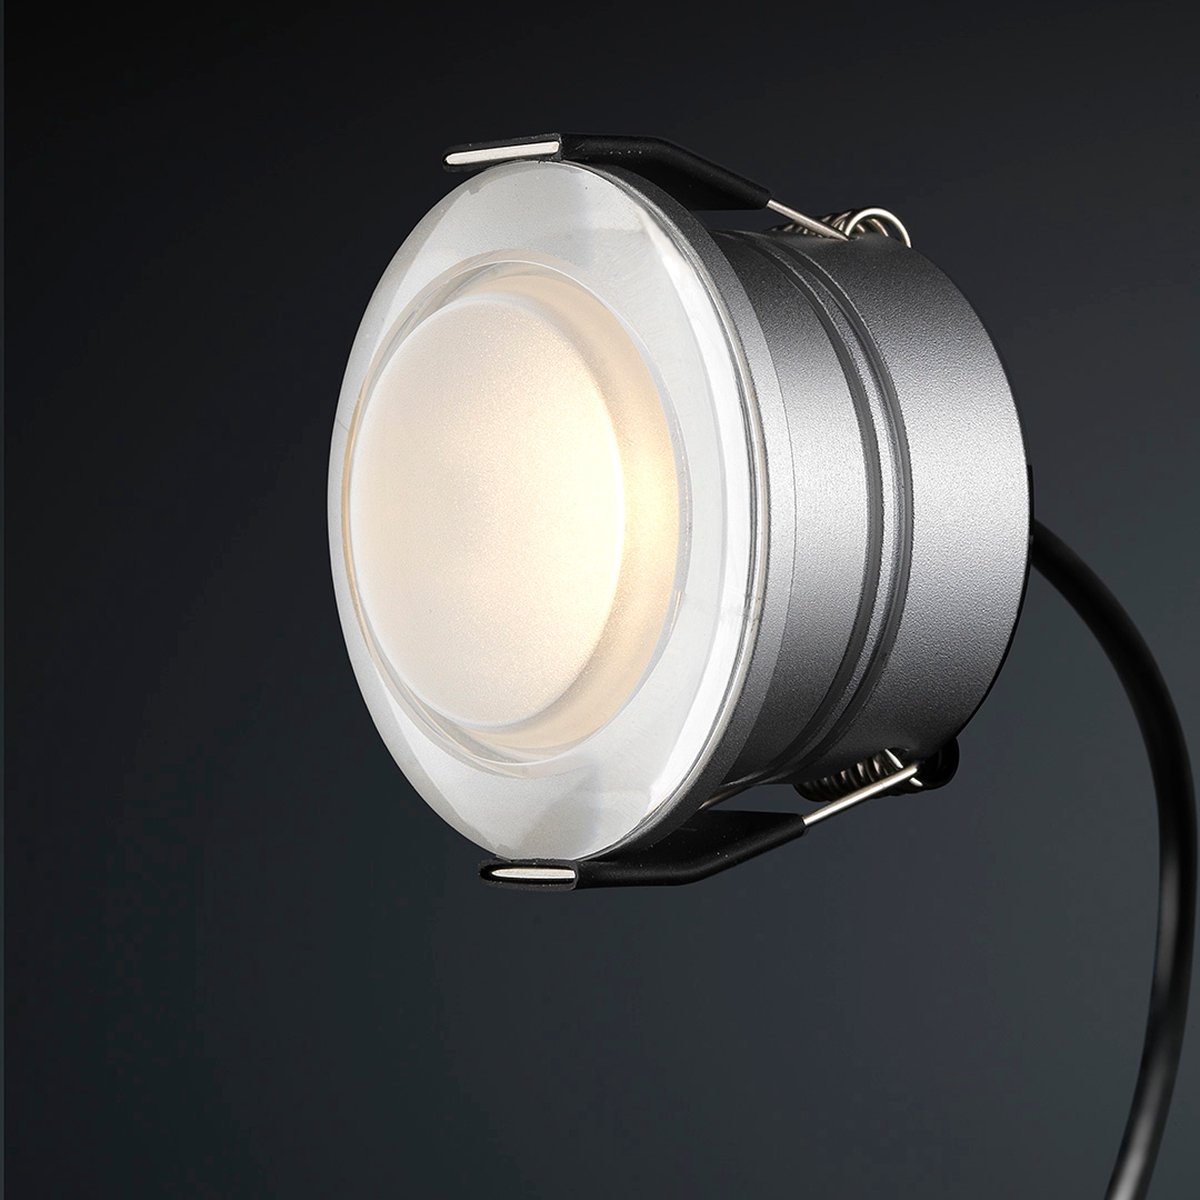 Cree LED inbouwspot Berga in | acryl | warmwit | 3 watt | dimbaar | plafond verlichting | LED spots | spotjes | downlight